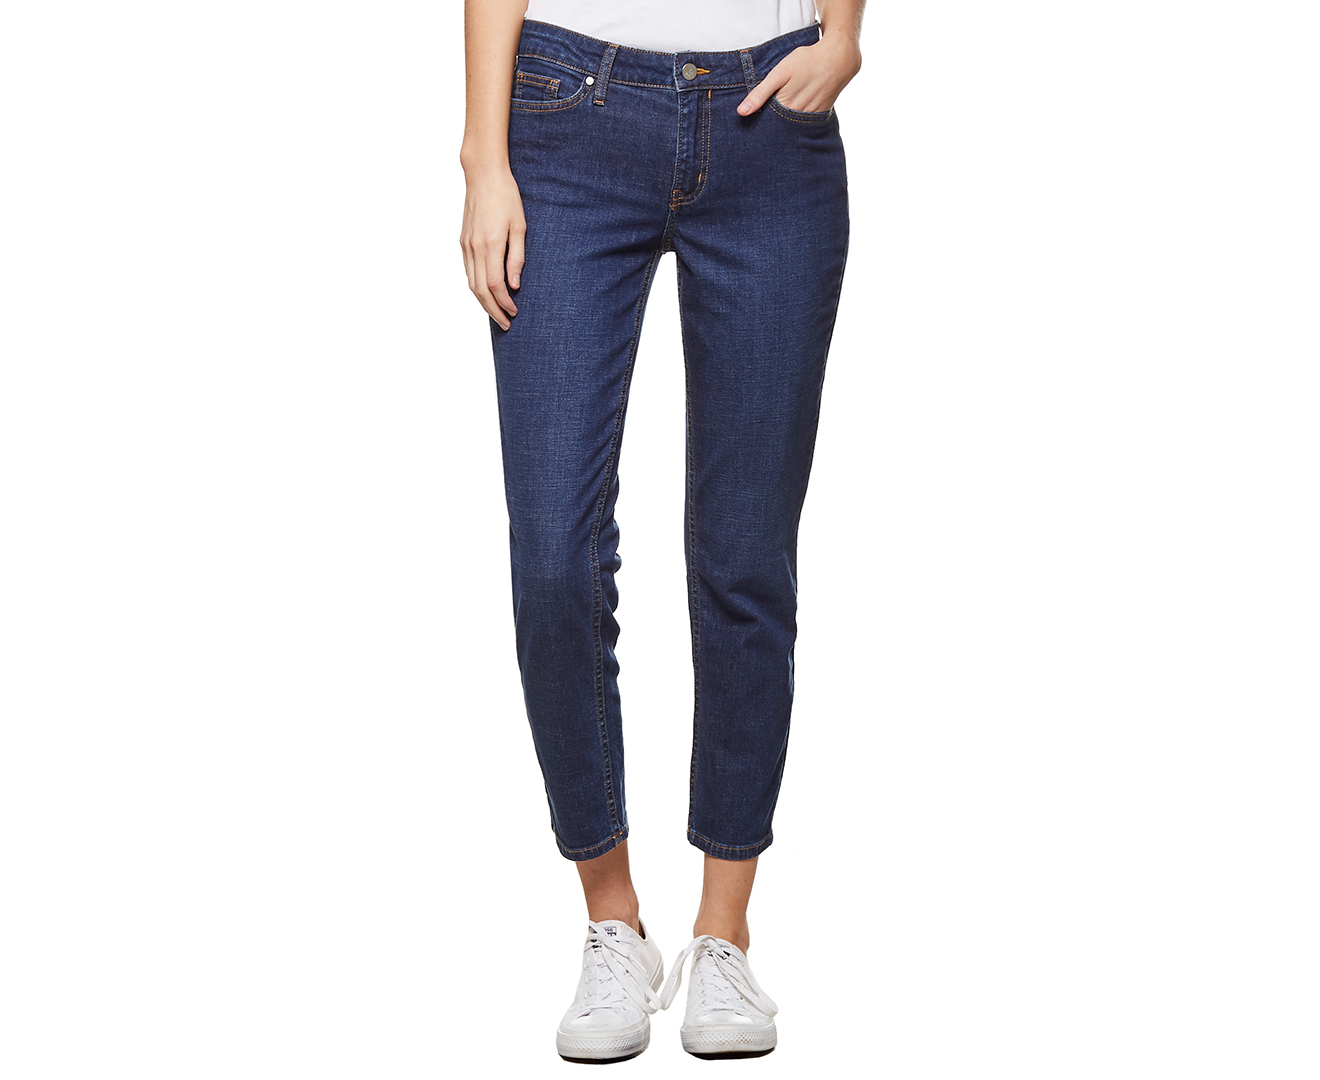 Calvin Klein Jeans Women's Ankle Skinny Jean - Mallory Blue | Catch.com.au